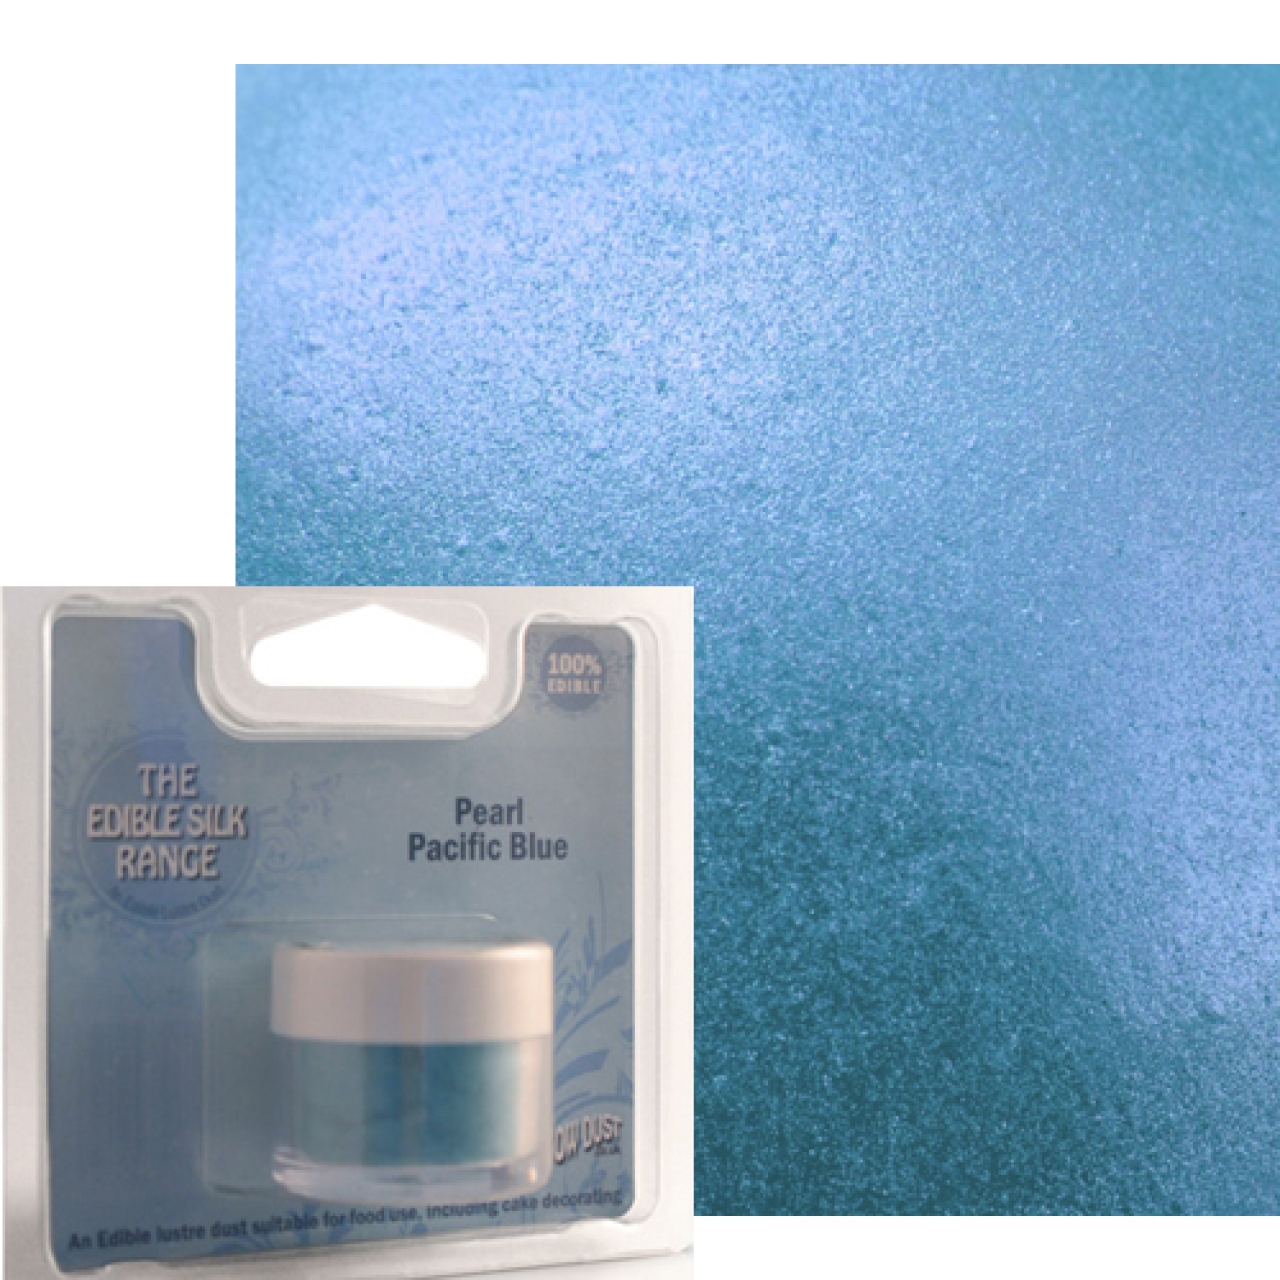 Speisefarbpulver "Pearl Pacific Blue", 100 % essbar, Blau, 3 g, Rainbow Dust